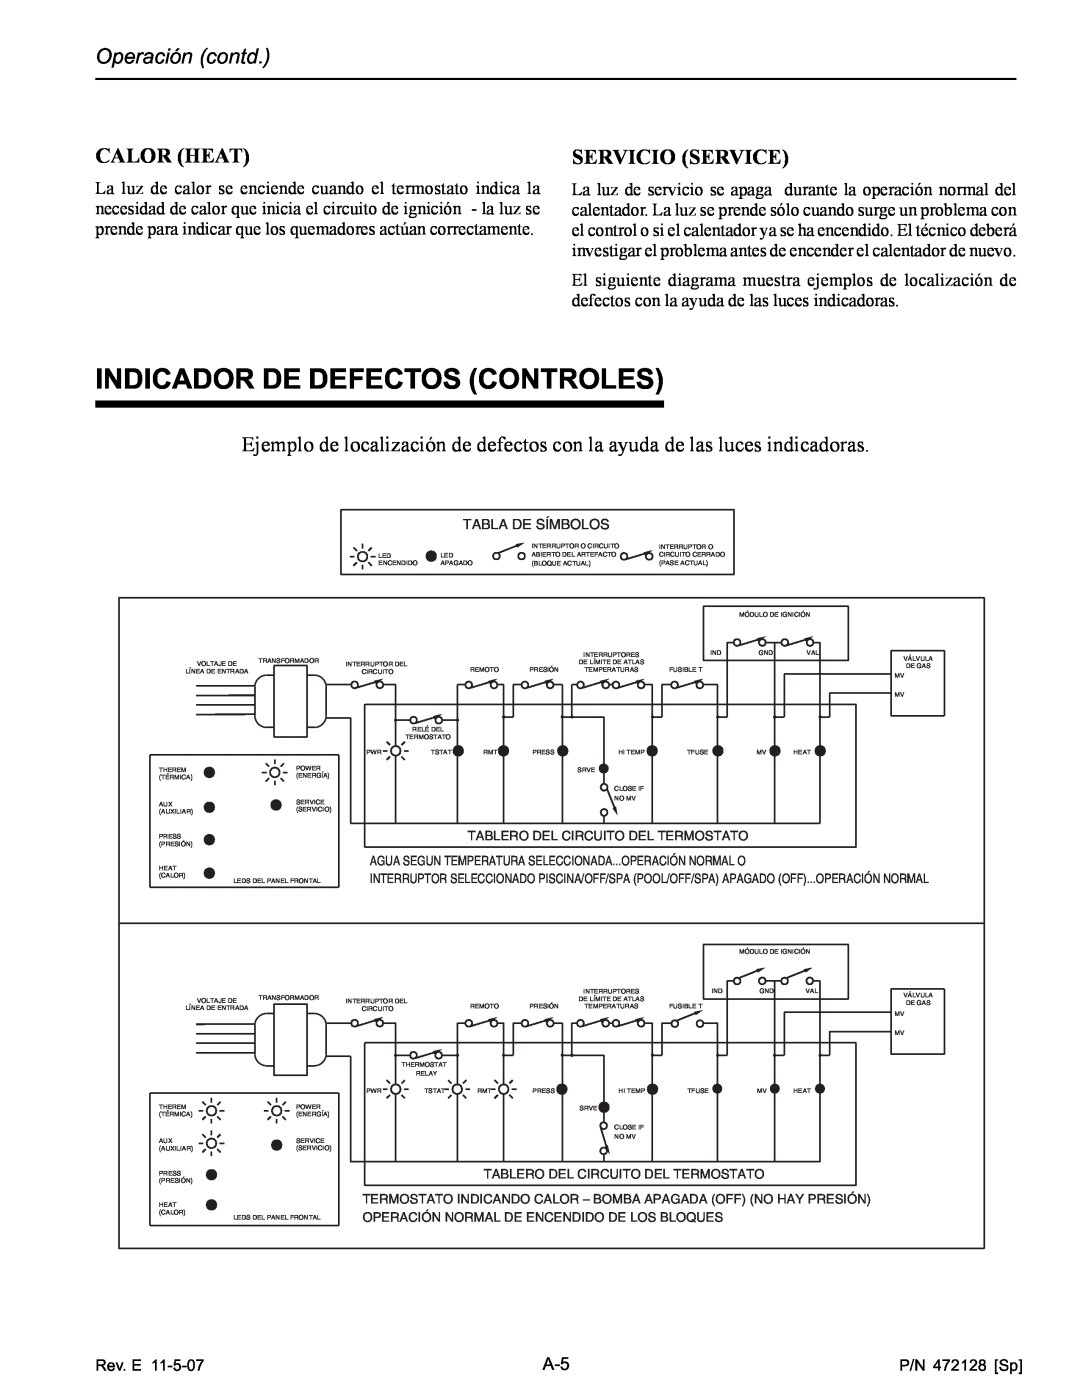 Pentair Hot Tub manual Indicador De Defectos Controles, Calor Heat, Servicio Service, Operación contd 